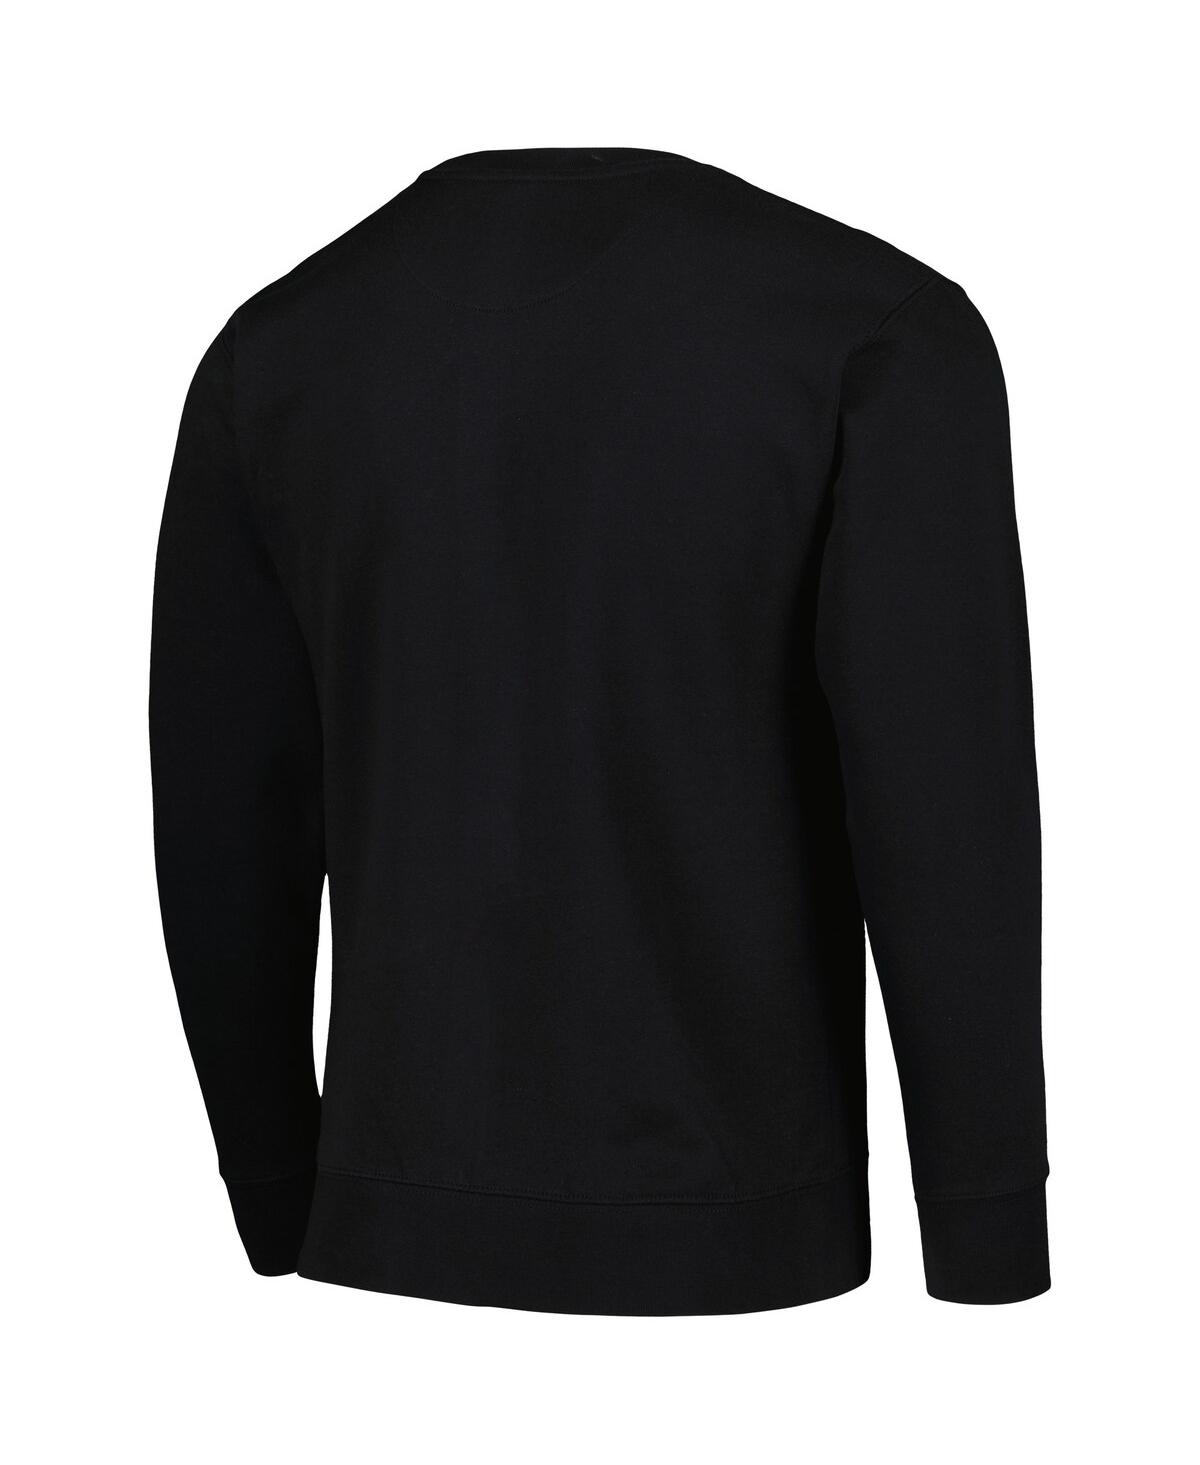 Shop American Classics Men's Black Yellowstone Logo Pullover Sweatshirt